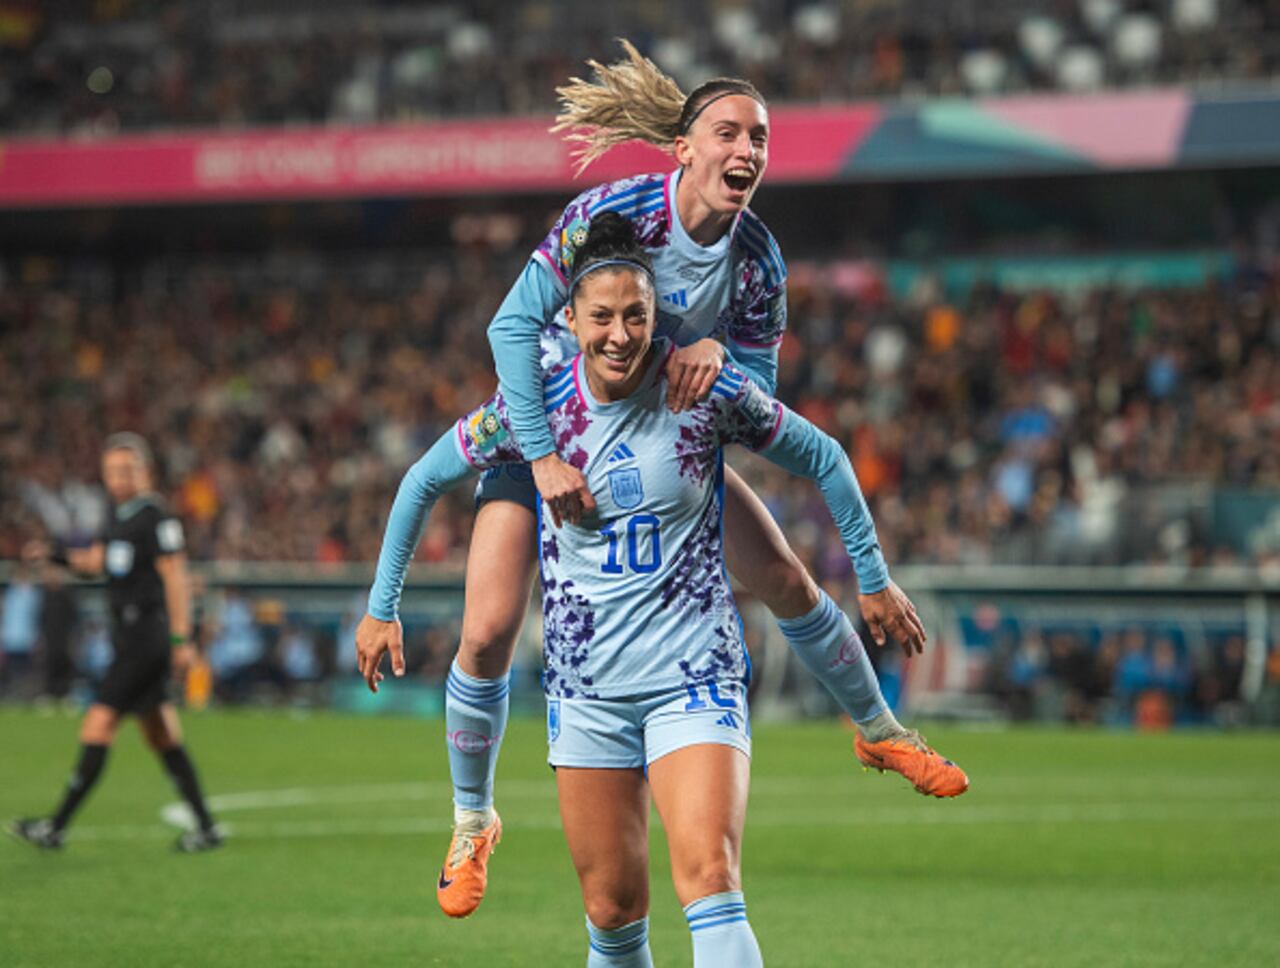 Con una sensacional actuación de Aitana Bonmatí, que anotó dos veces, España goleó este sábado en Auckland a Suiza (5-1) y avanzó por primera vez en su historia a cuartos de final de un Mundial femenino.